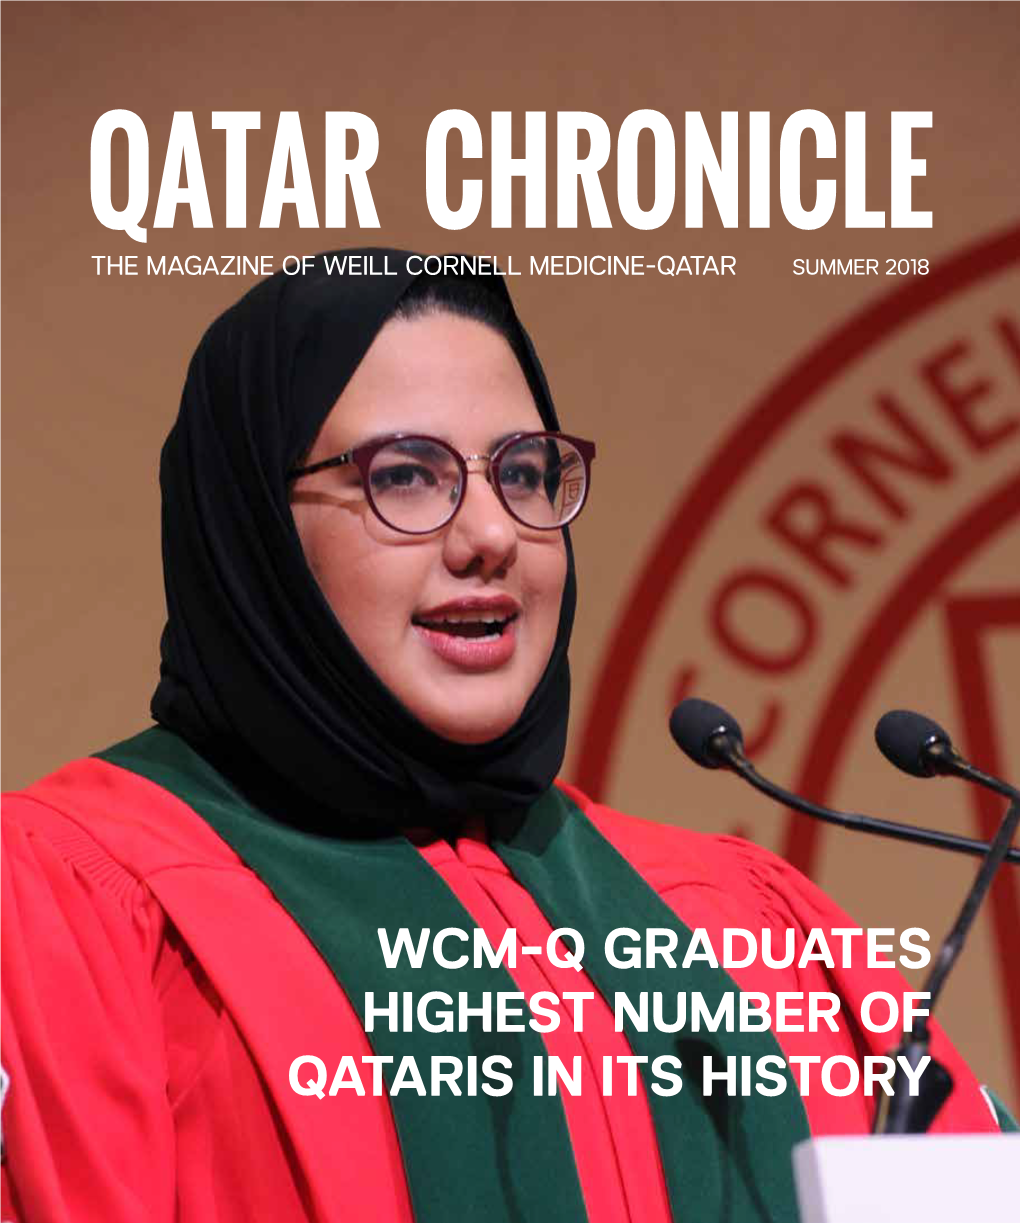 Wcm-Q Graduates Highest Number of Qataris in Its History 2 Contents